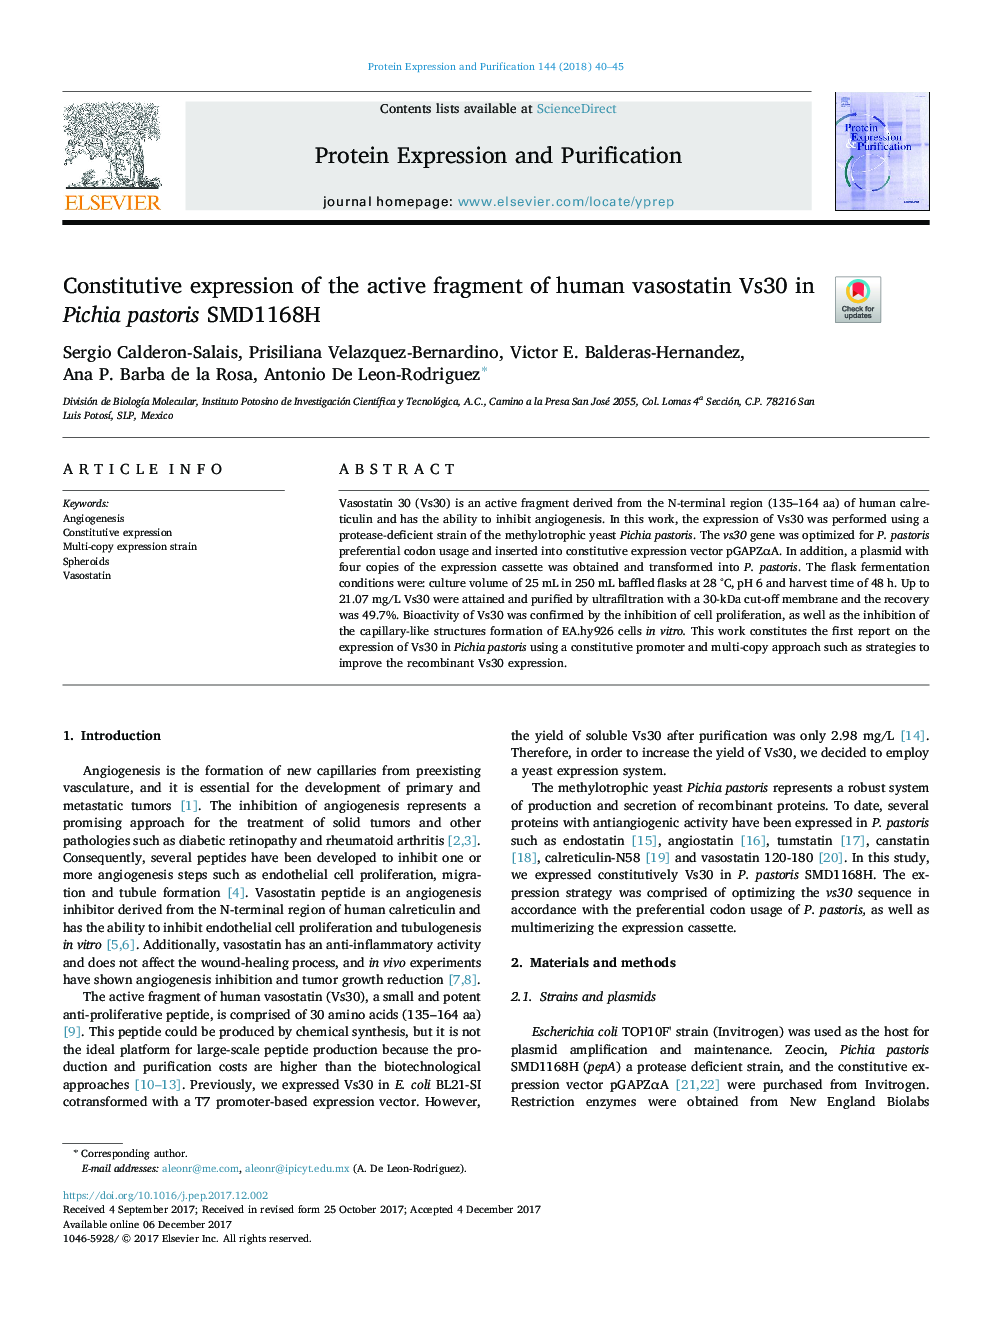 Constitutive expression of the active fragment of human vasostatin Vs30 in Pichia pastoris SMD1168H